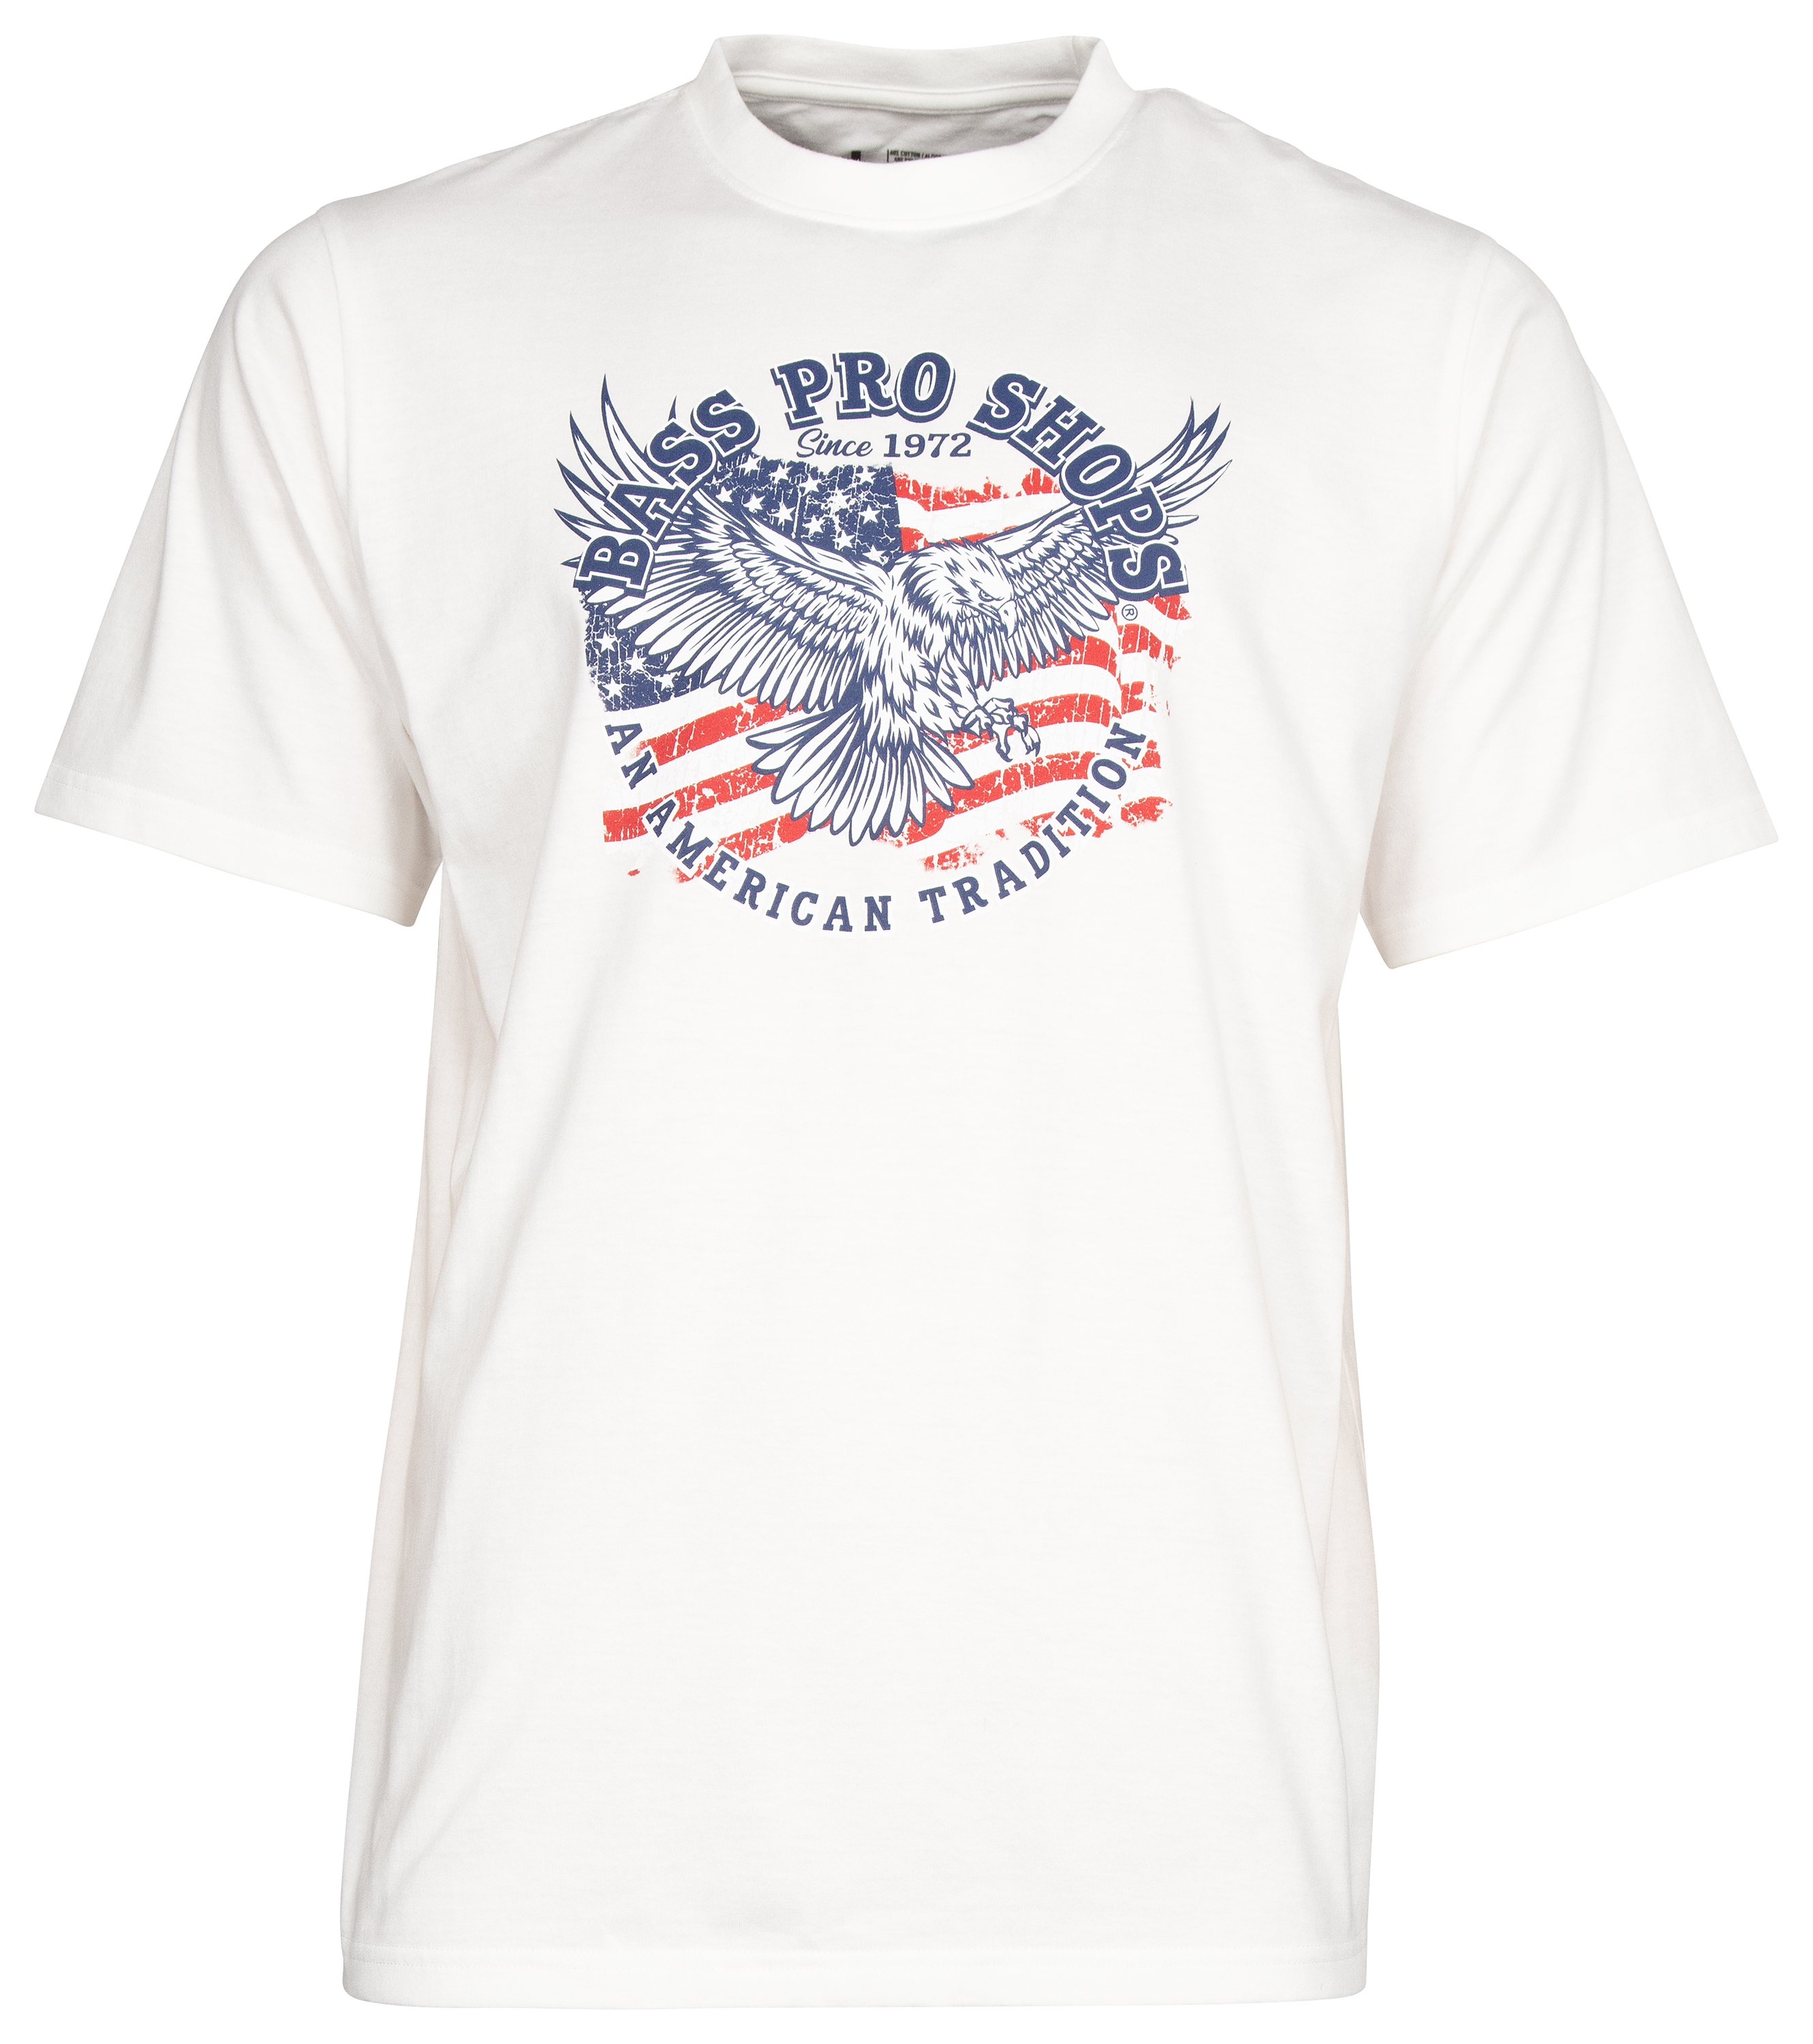 Bass Pro Shops American Tradition Short-Sleeve T-Shirt